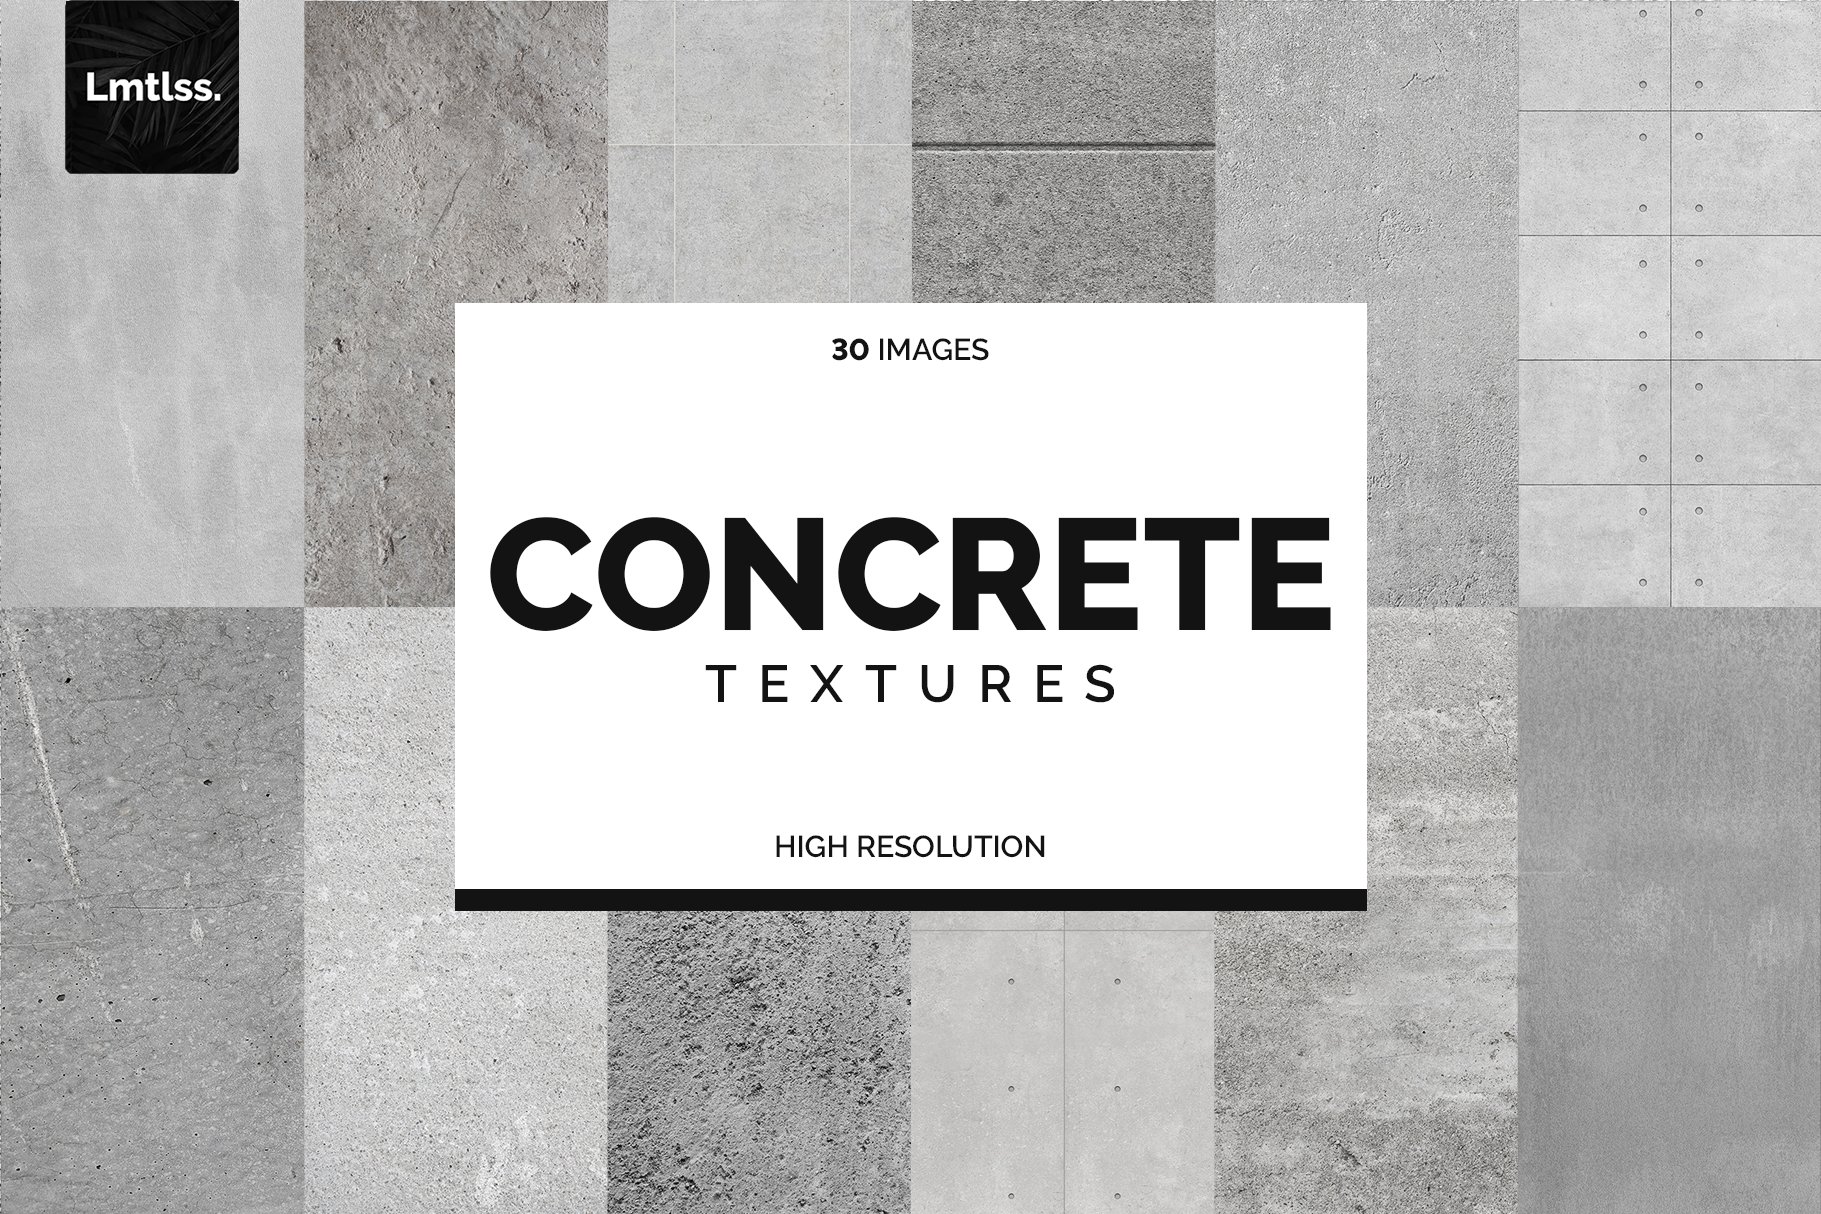 30 Concrete Textures cover image.